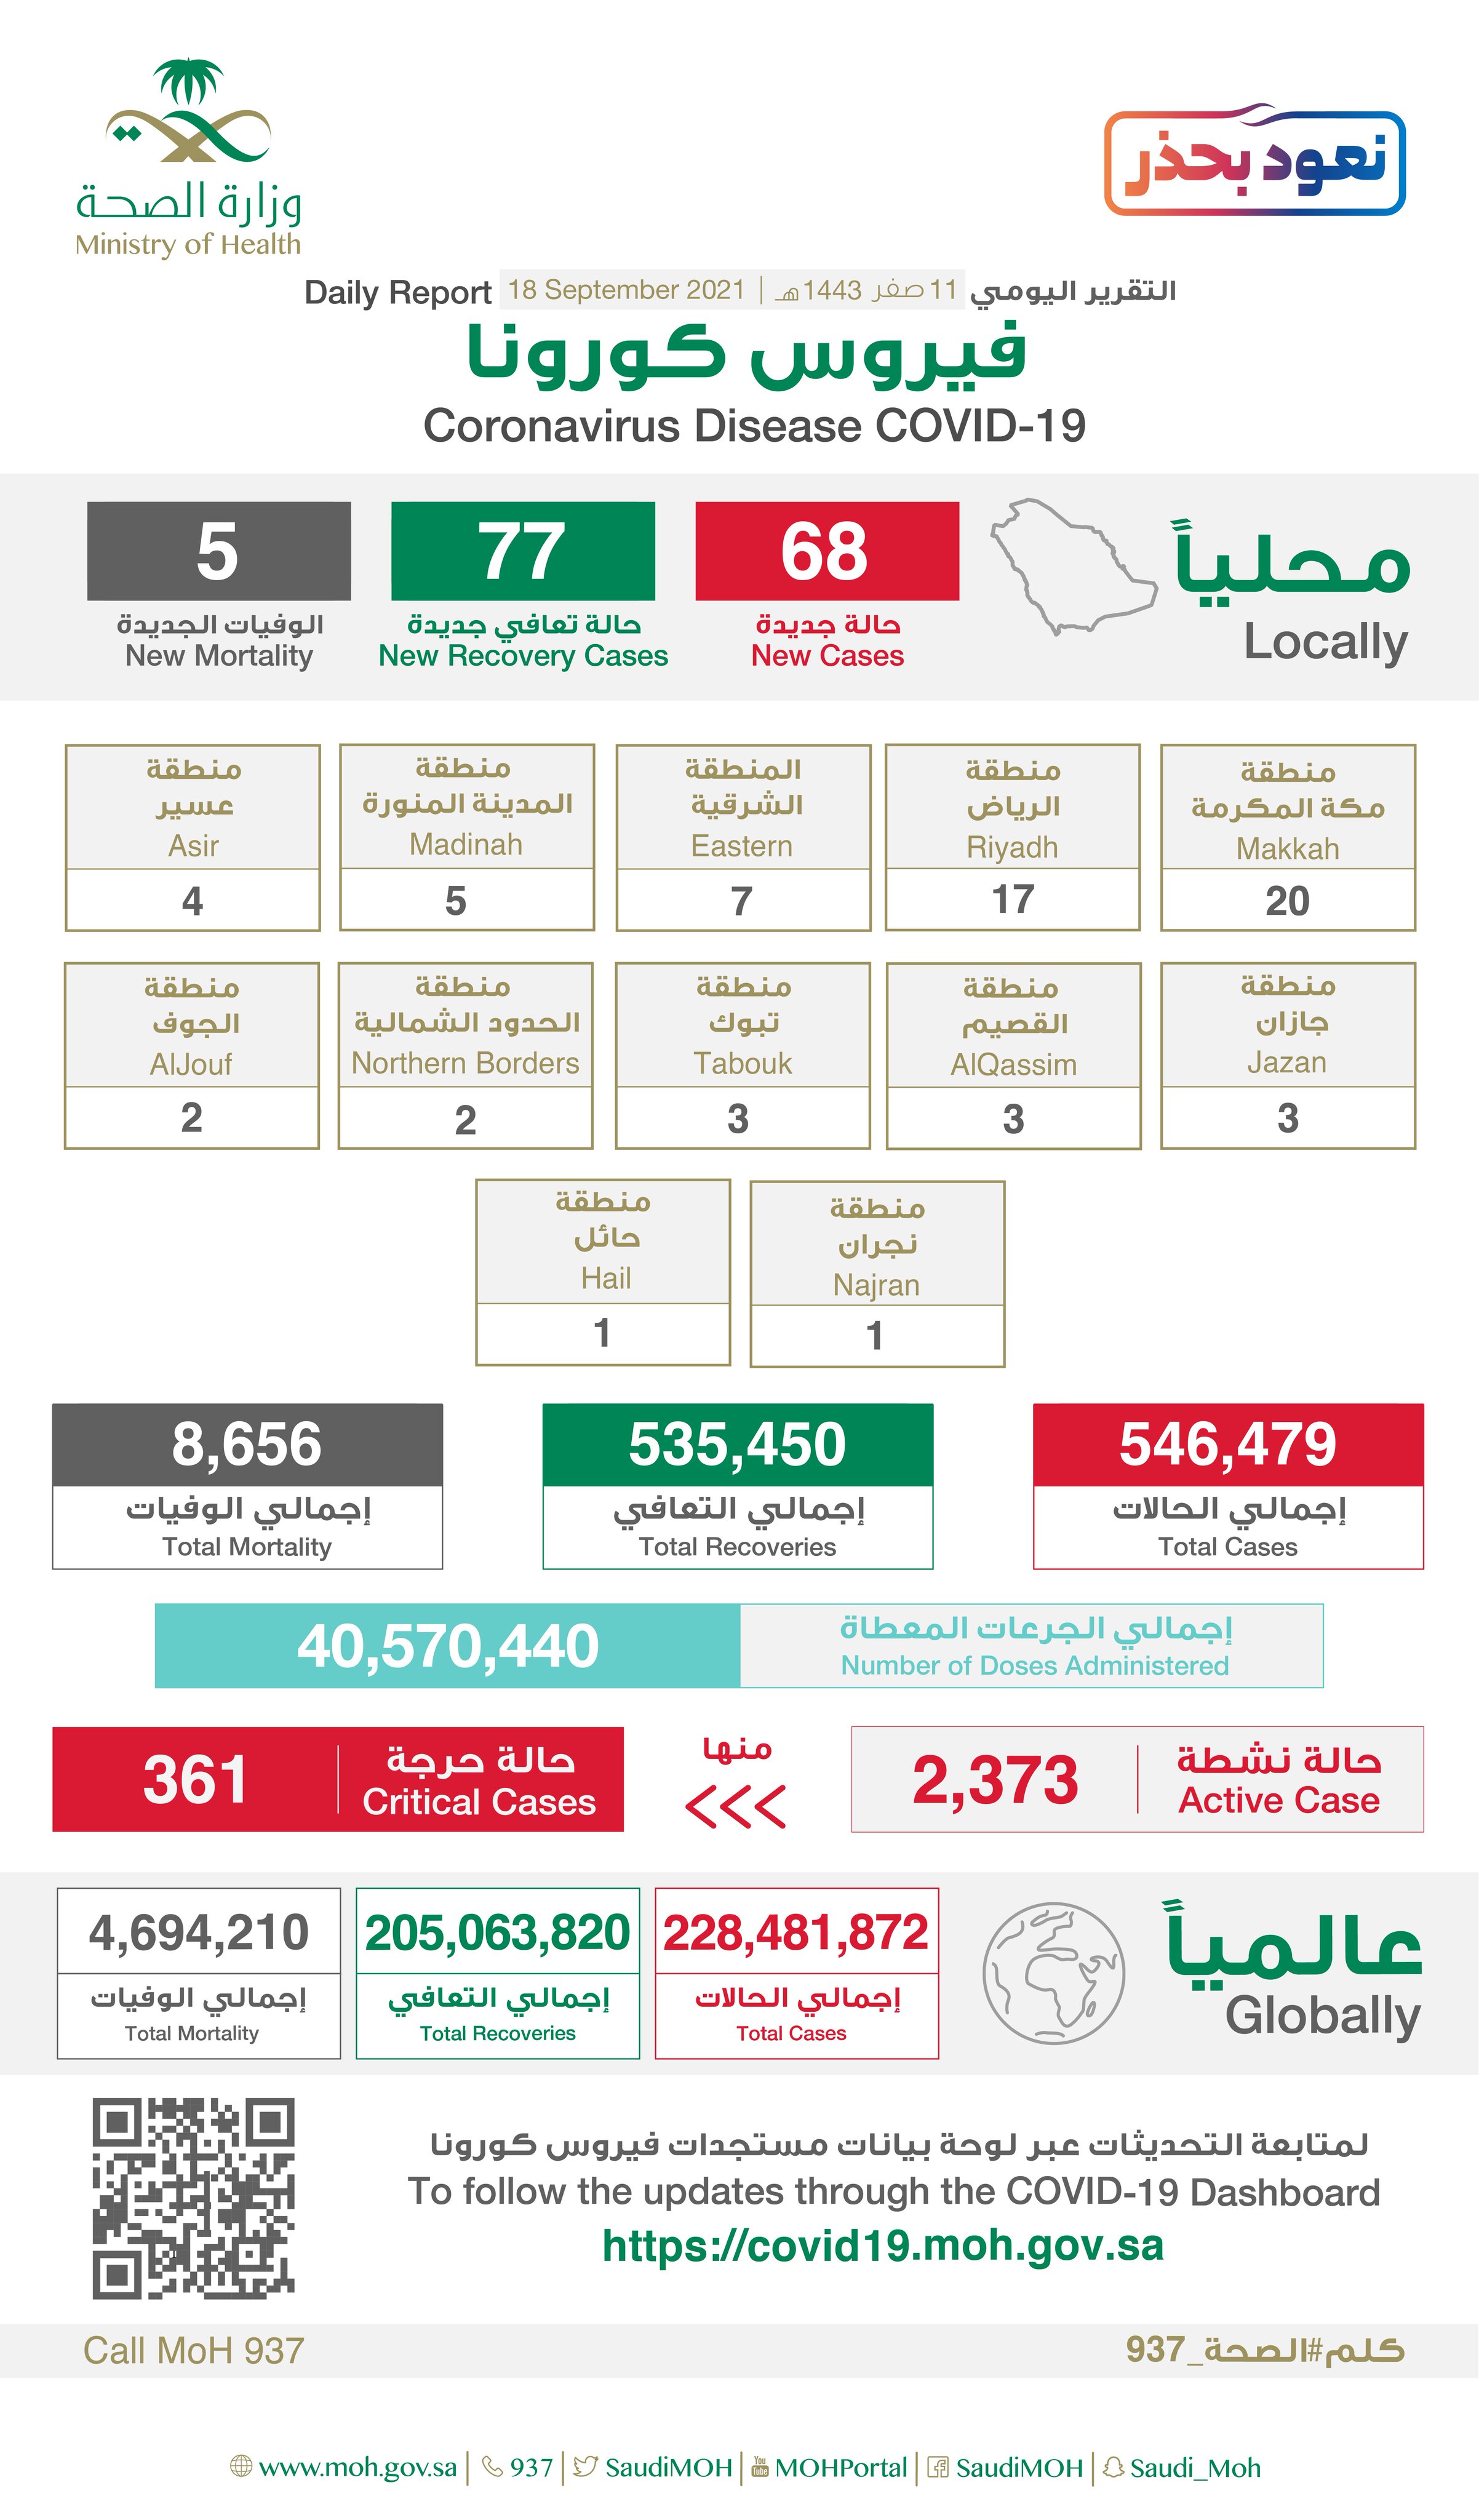 Saudi Arabia Coronavirus : Total Cases : 546,479 , New Cases : 68, Cured : 535,450 , Deaths: 8,656, Active Cases : 2,373